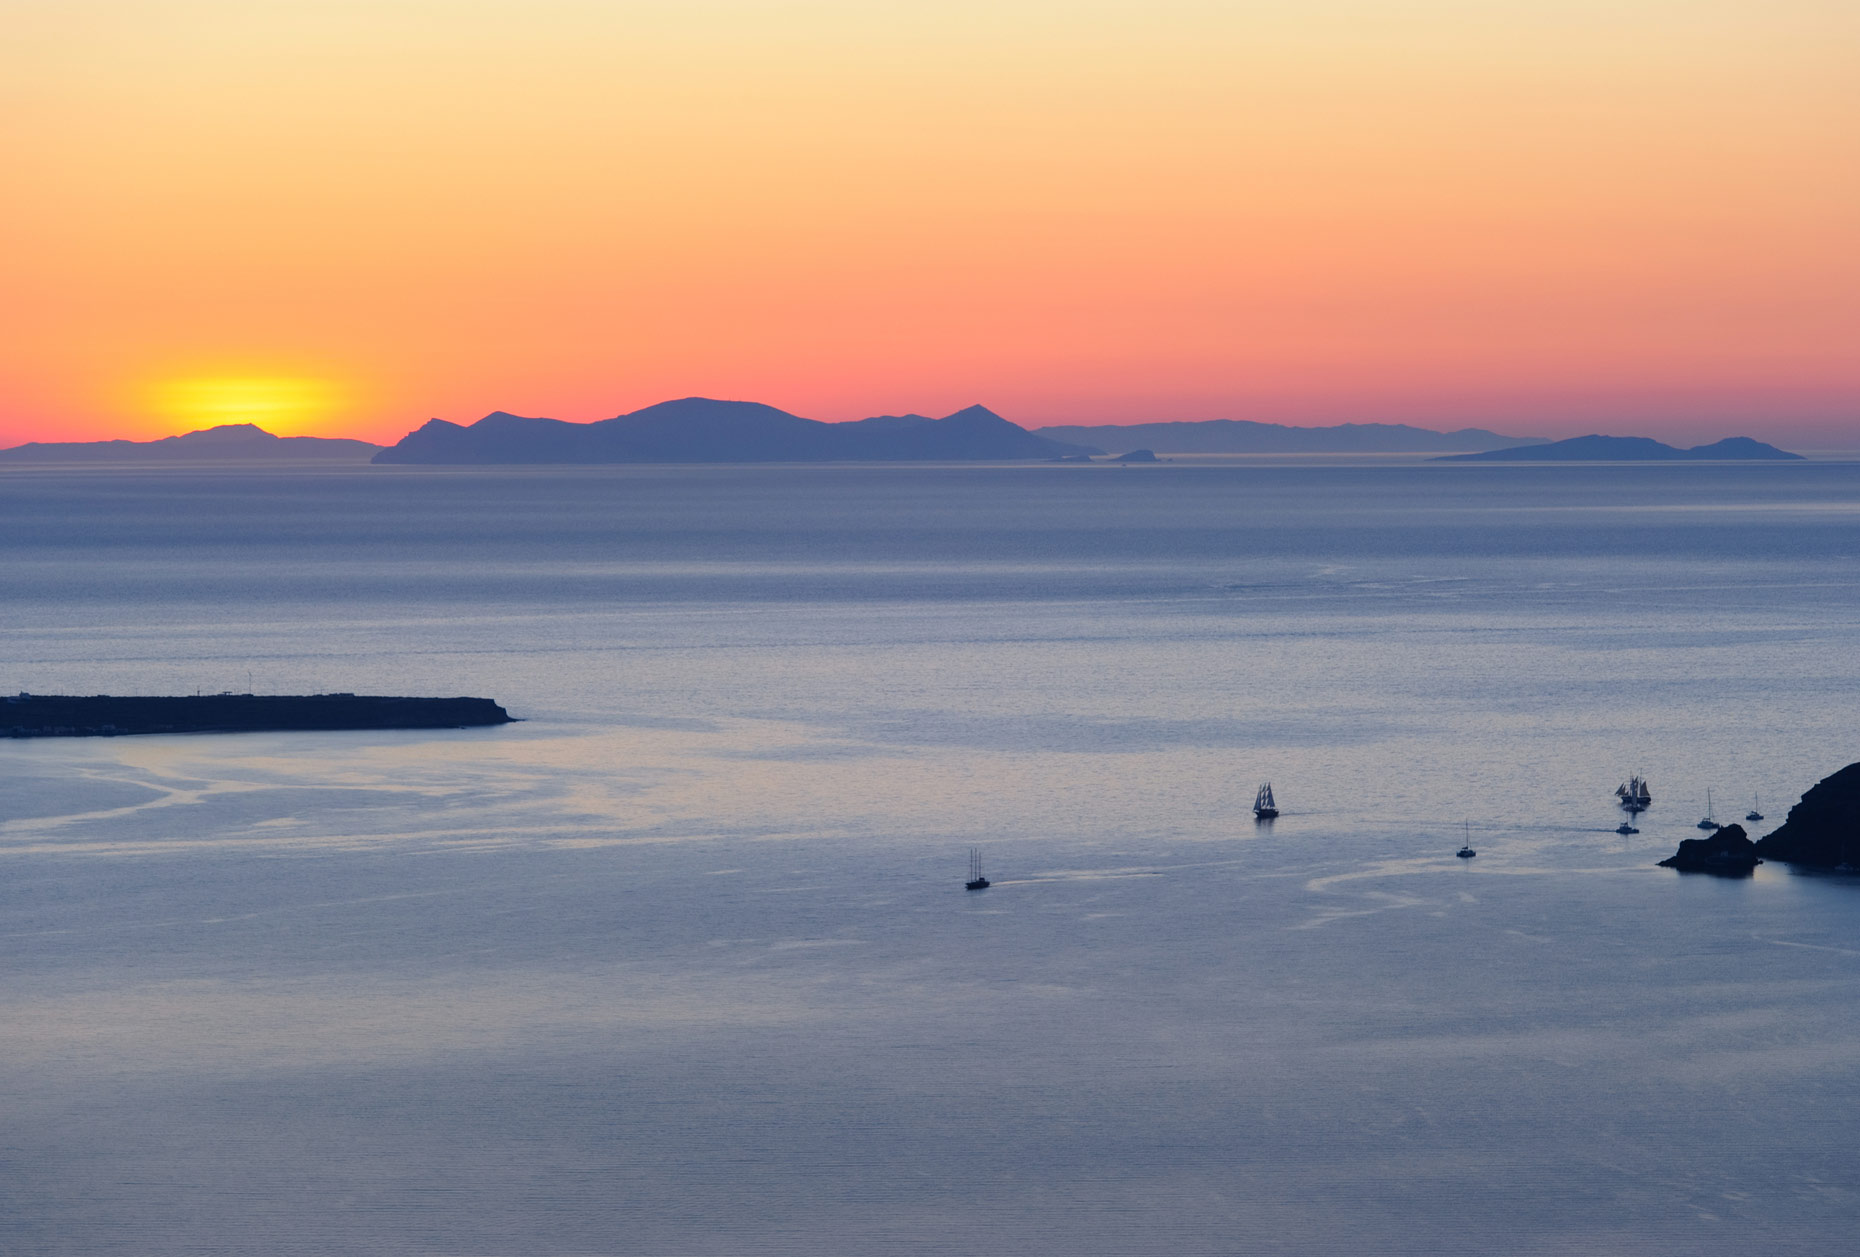 Sunset from Grace hotel in Santorini